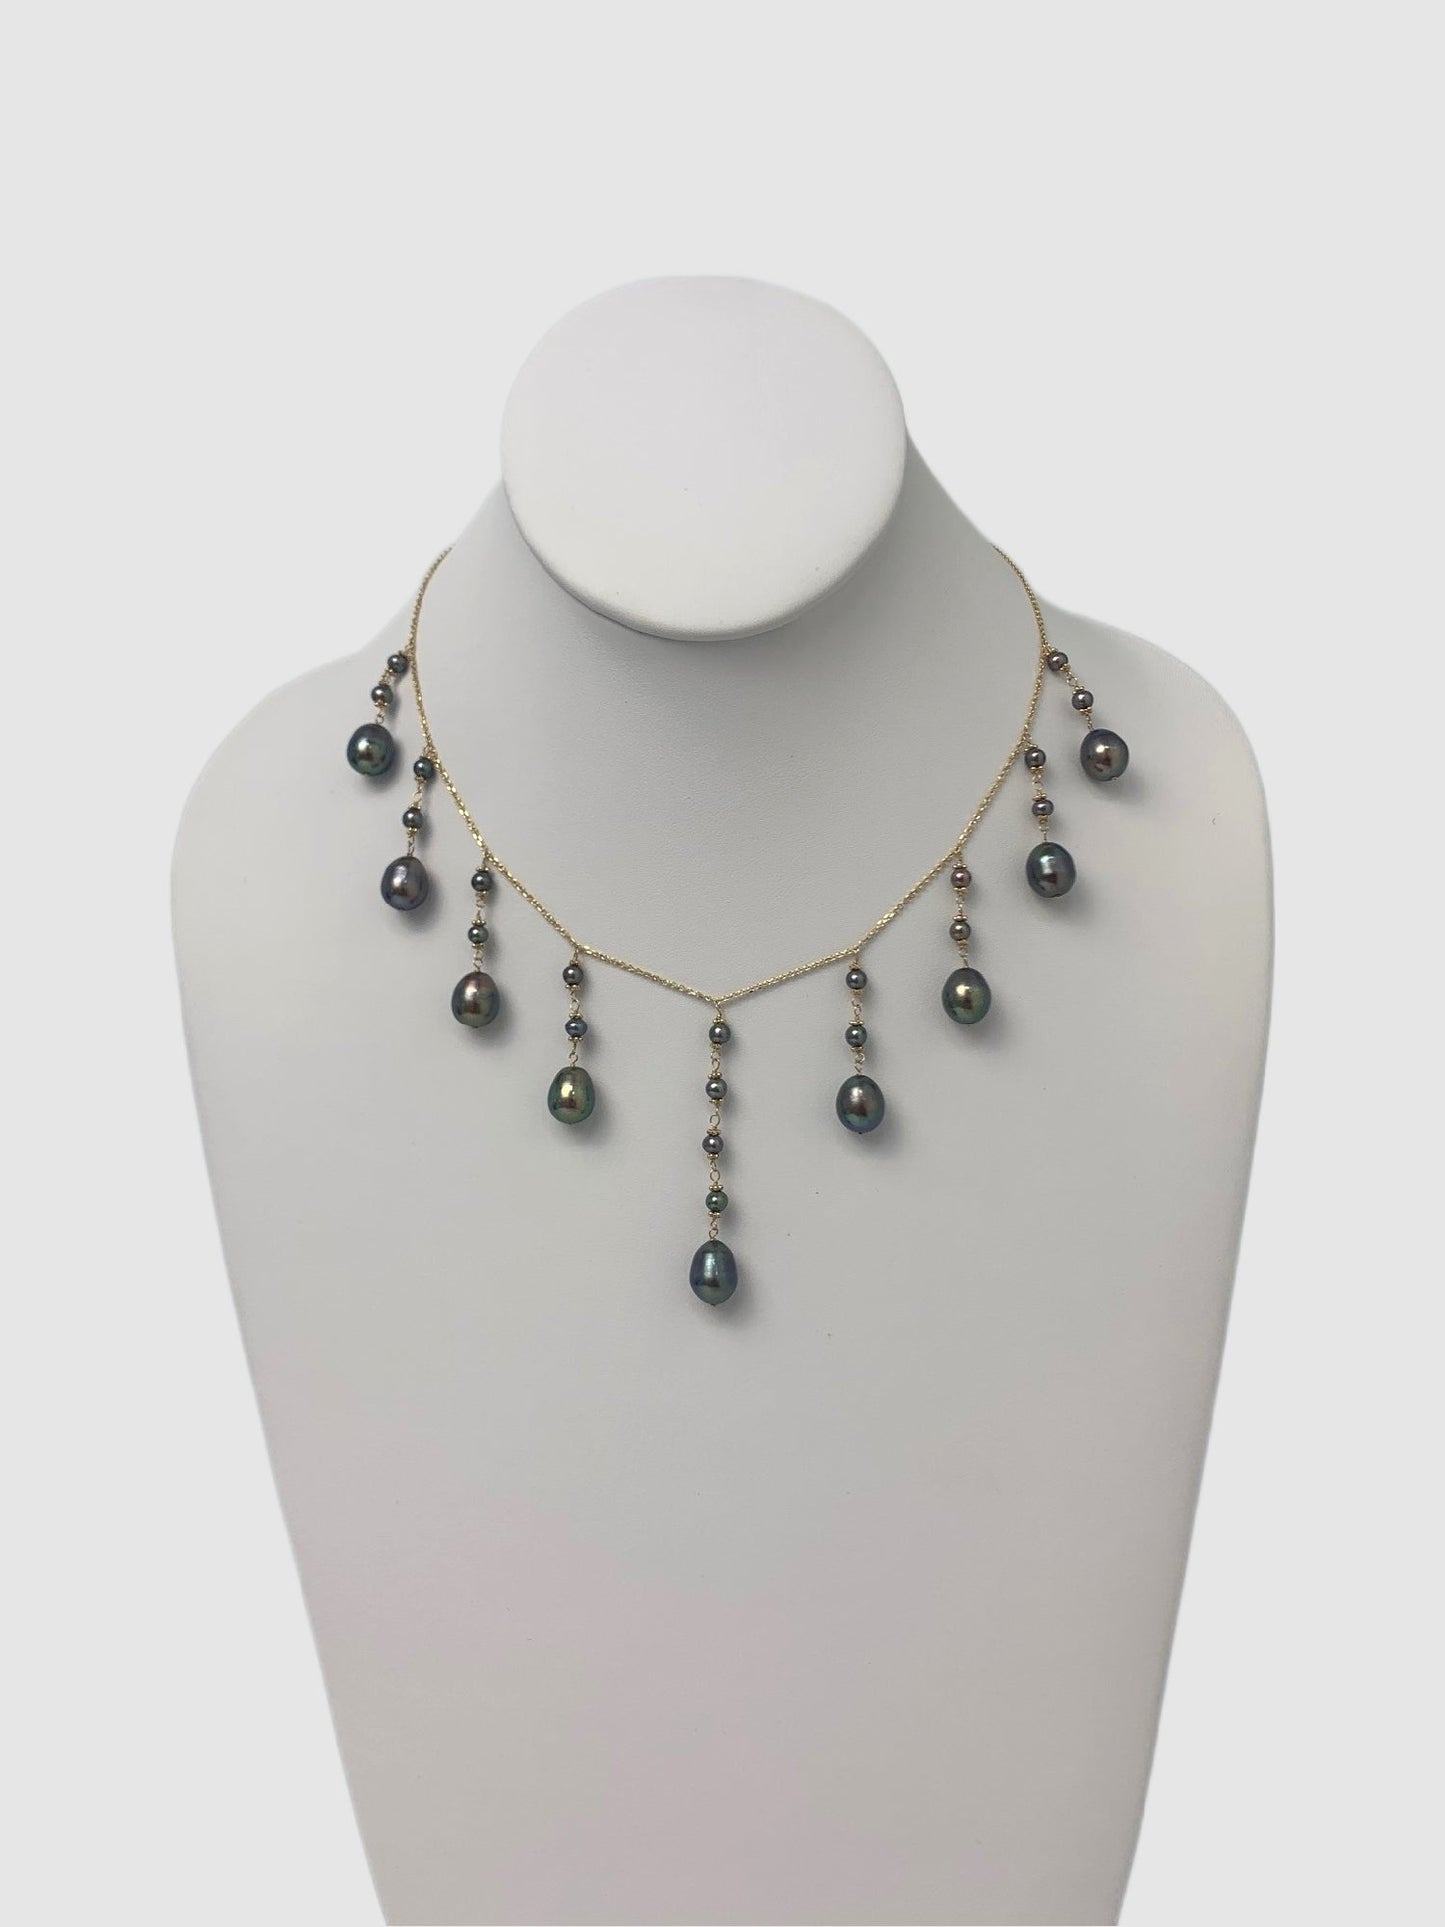 15" Black Pearl Cleopatra Necklace in 14KY - NCK-008-CLEOPRL14Y-BK-15